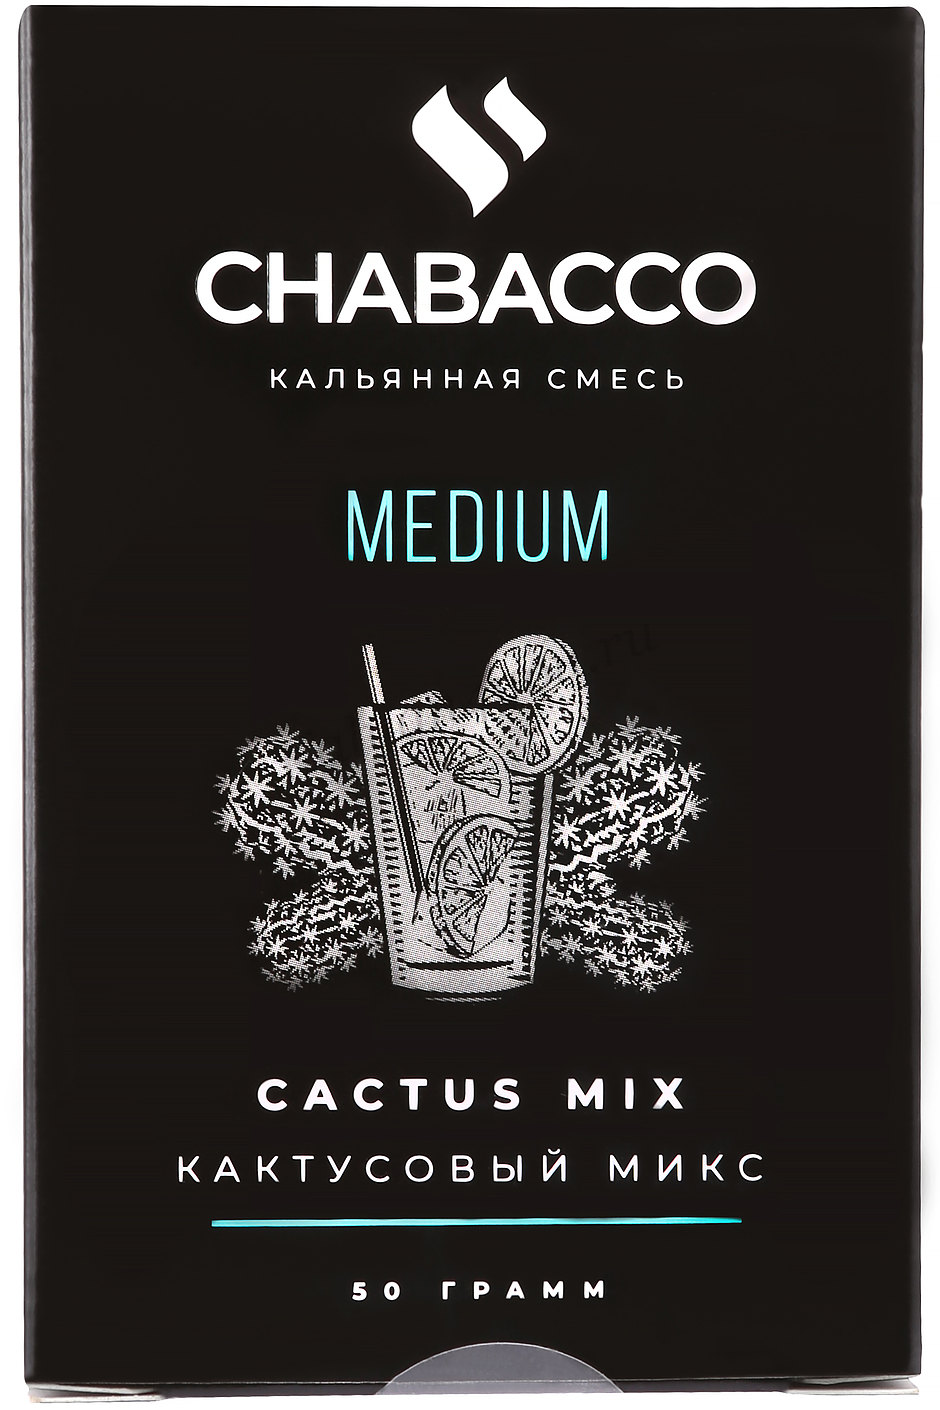 Chabacco medium Cactus Mix (Кактусовый микс)